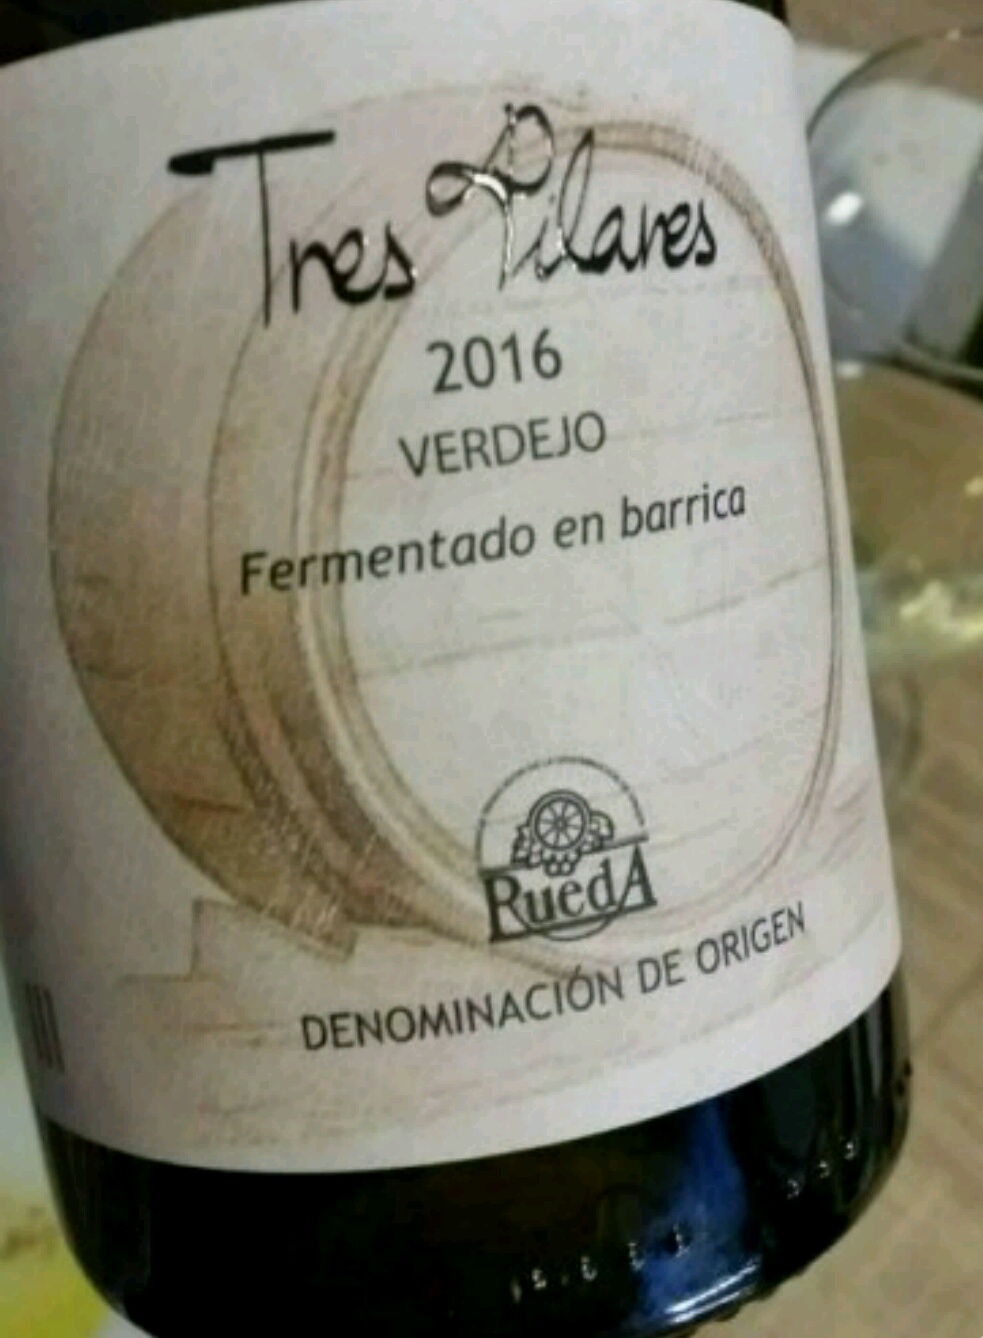 Cata del vino Tres Pilares Verdejo Fermentado en Barrica 2016, DO Rueda